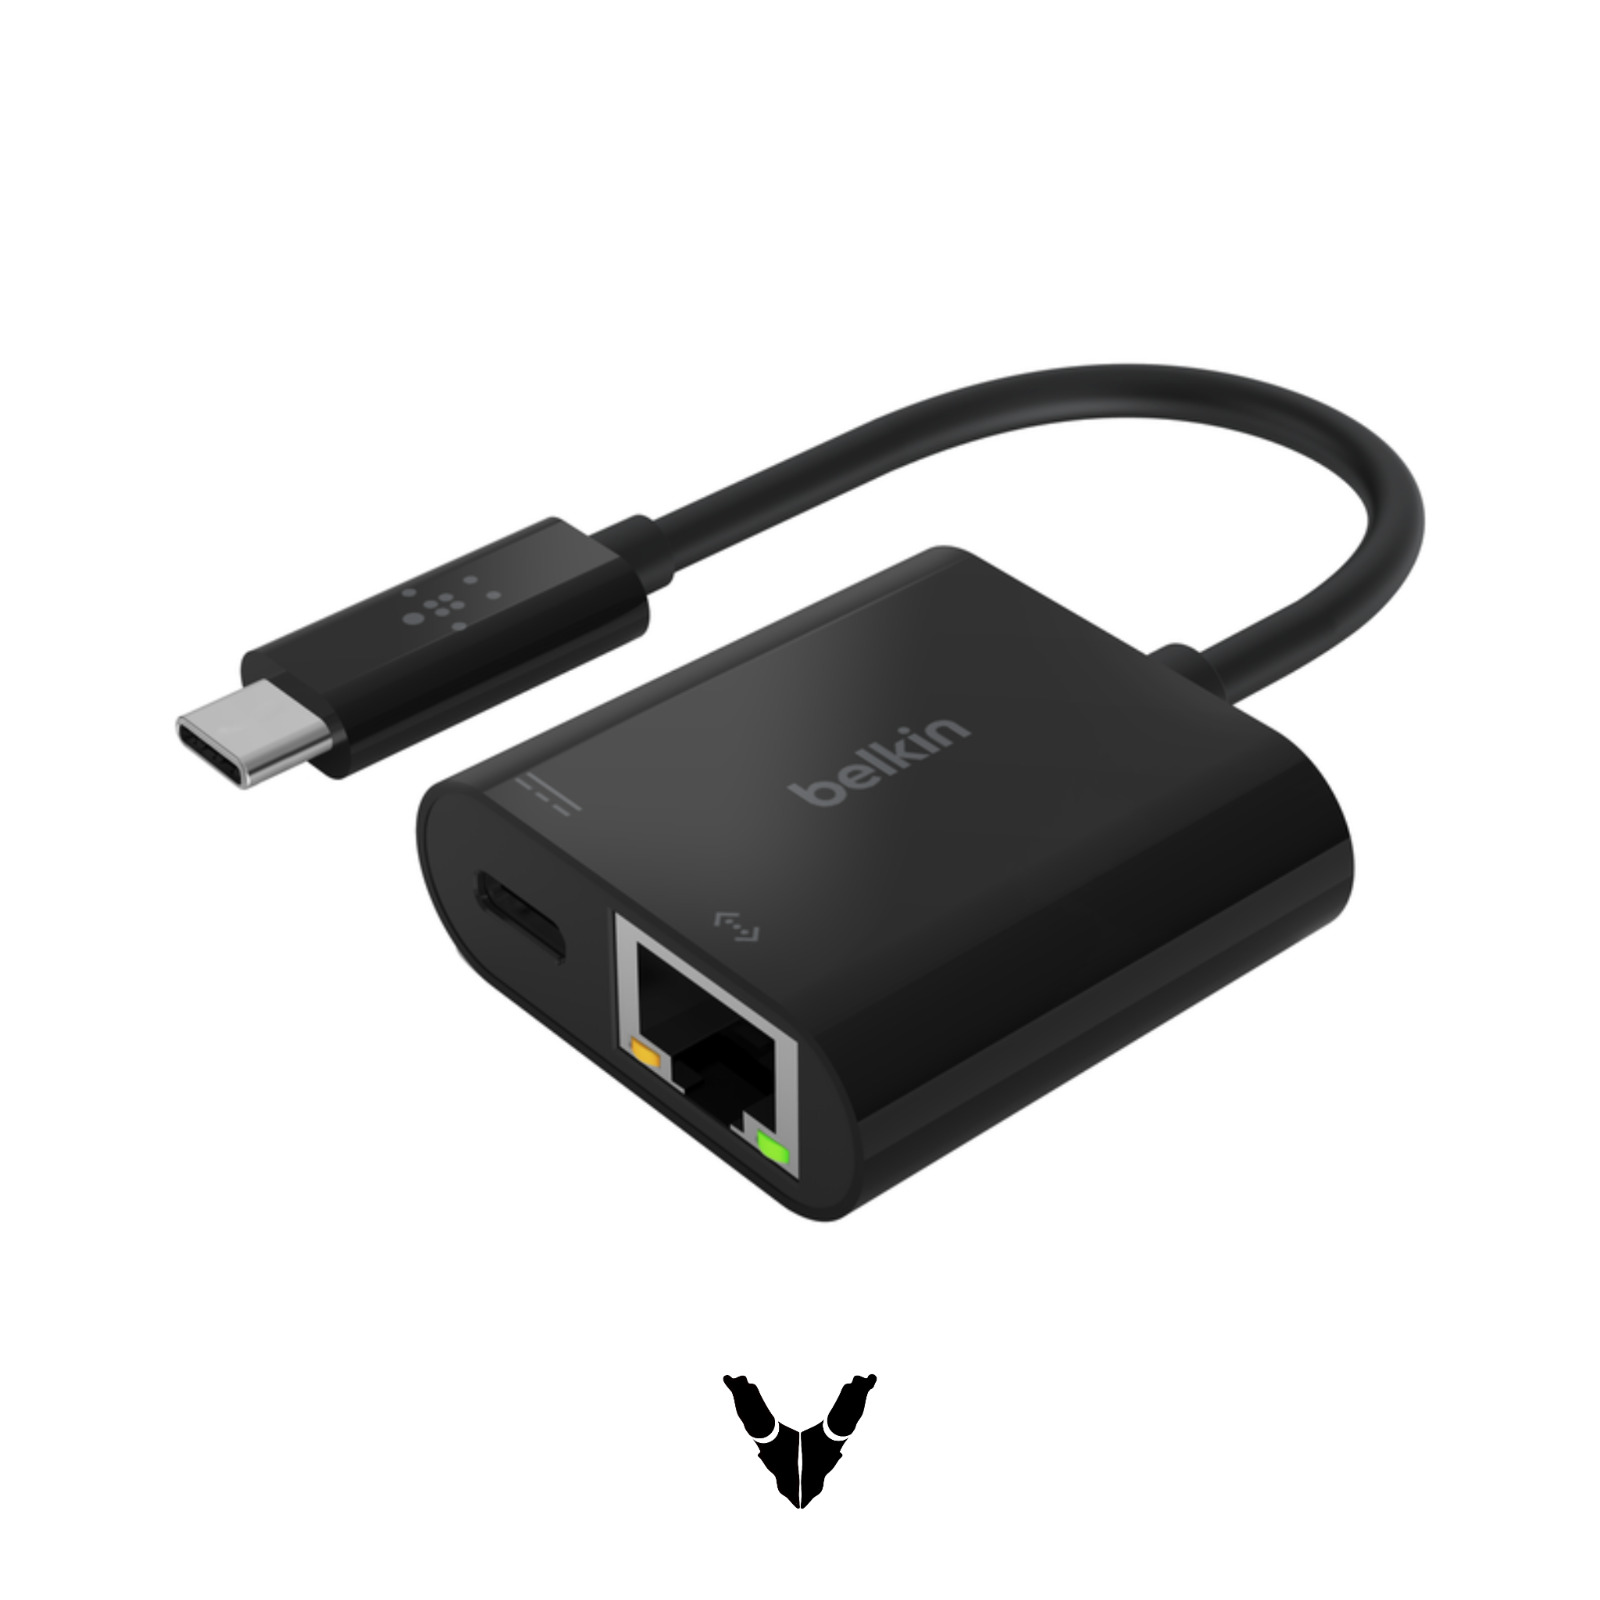 Belkin - USB-C to Ethernet + Charge Adapter - USB-C Thunderbolt 3 - Black